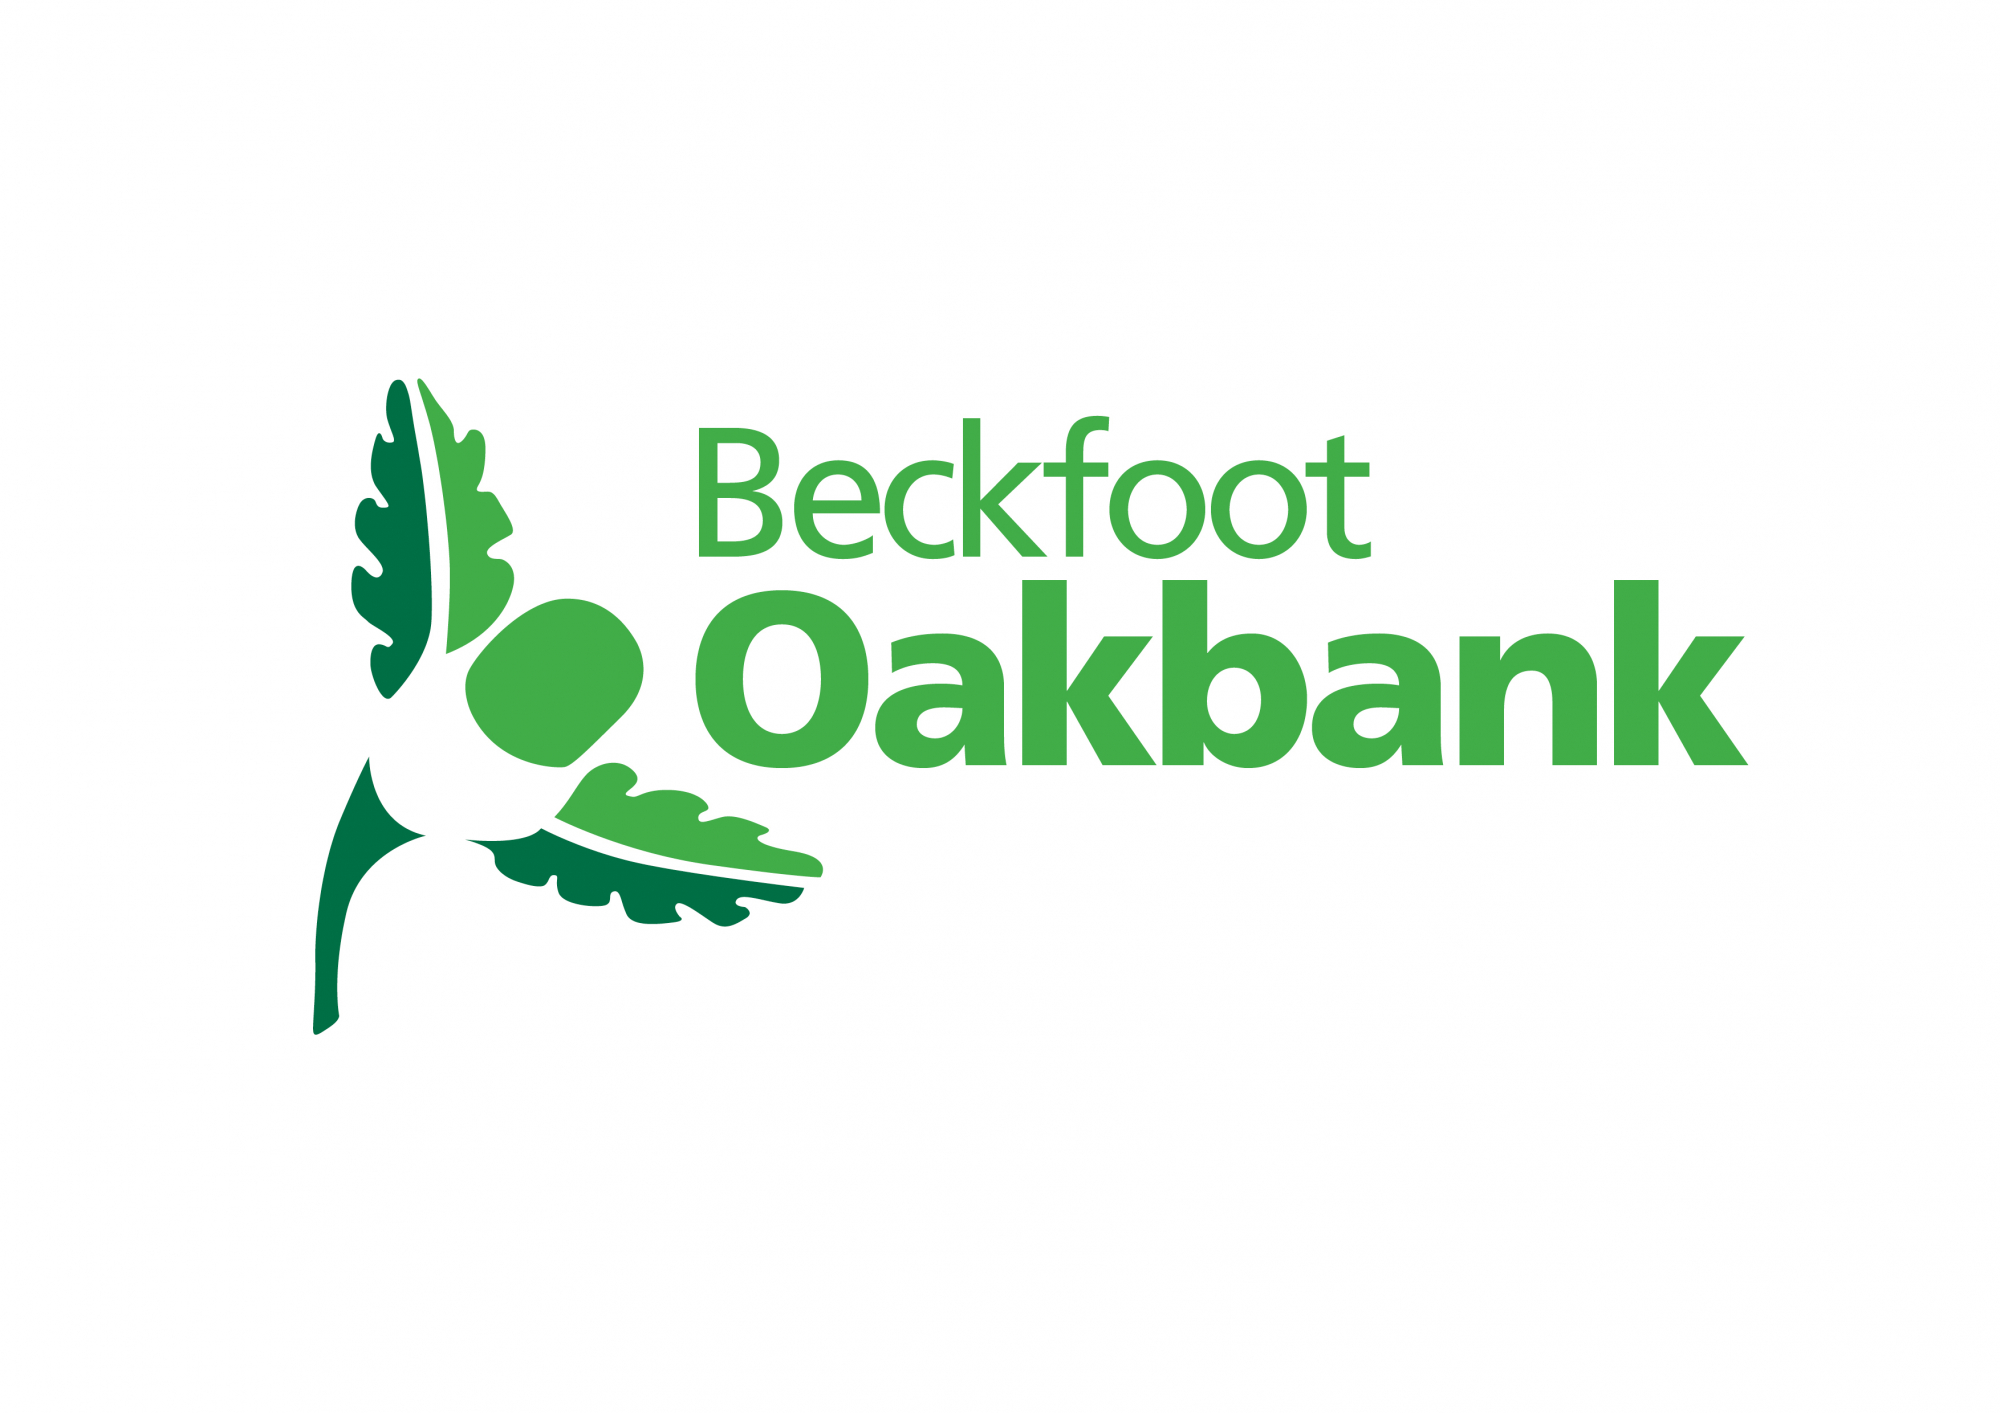 Beckfoot Oakbank_RGB